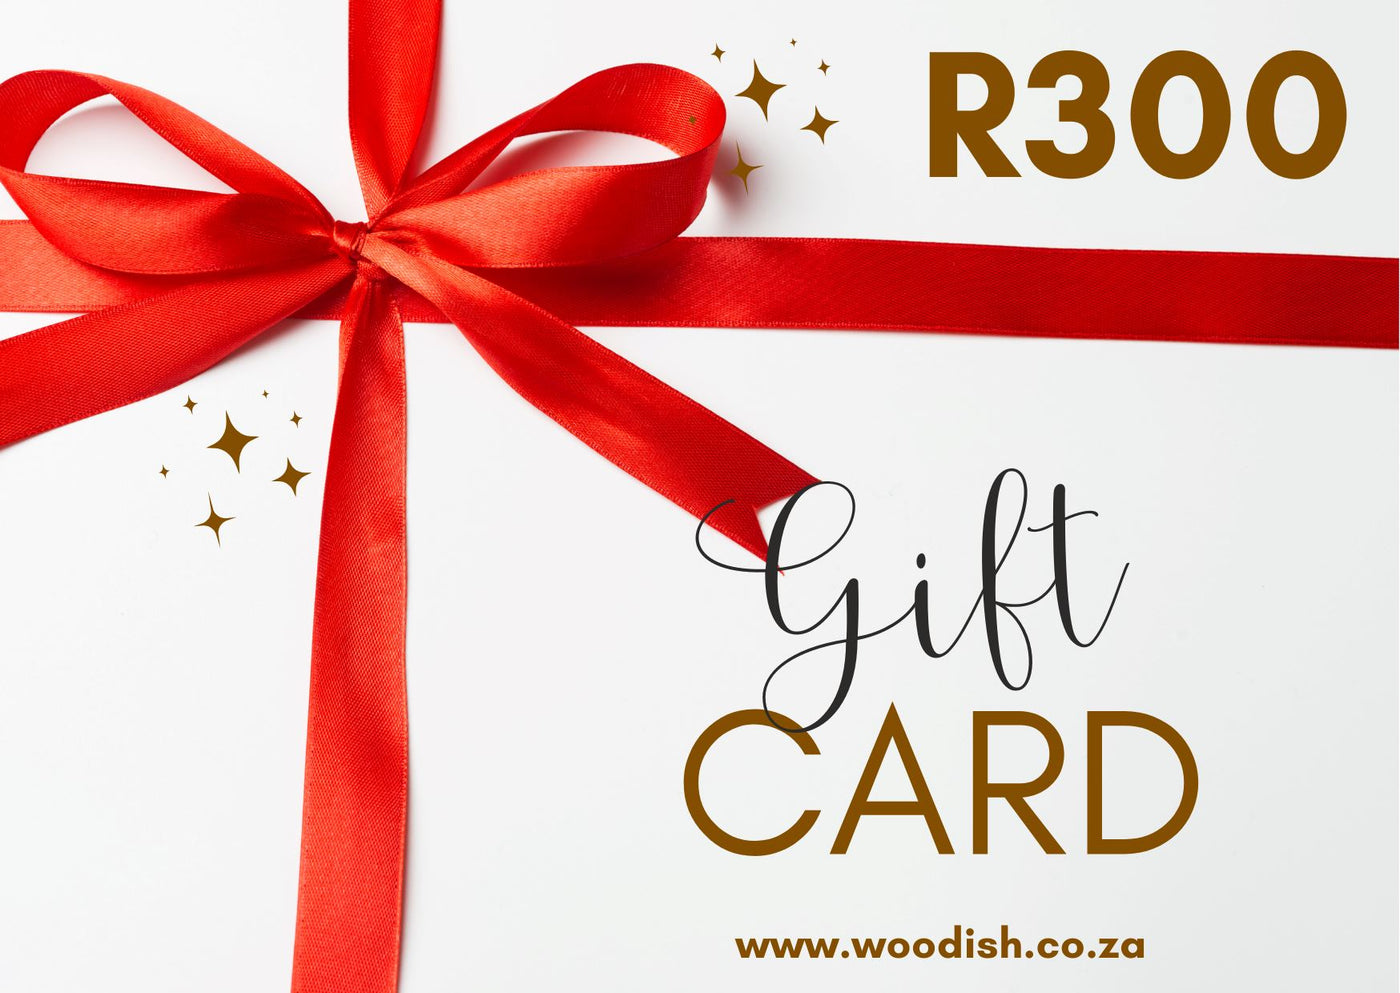 Woodish Gift Cards Gift Cards WoodishSA R 300 